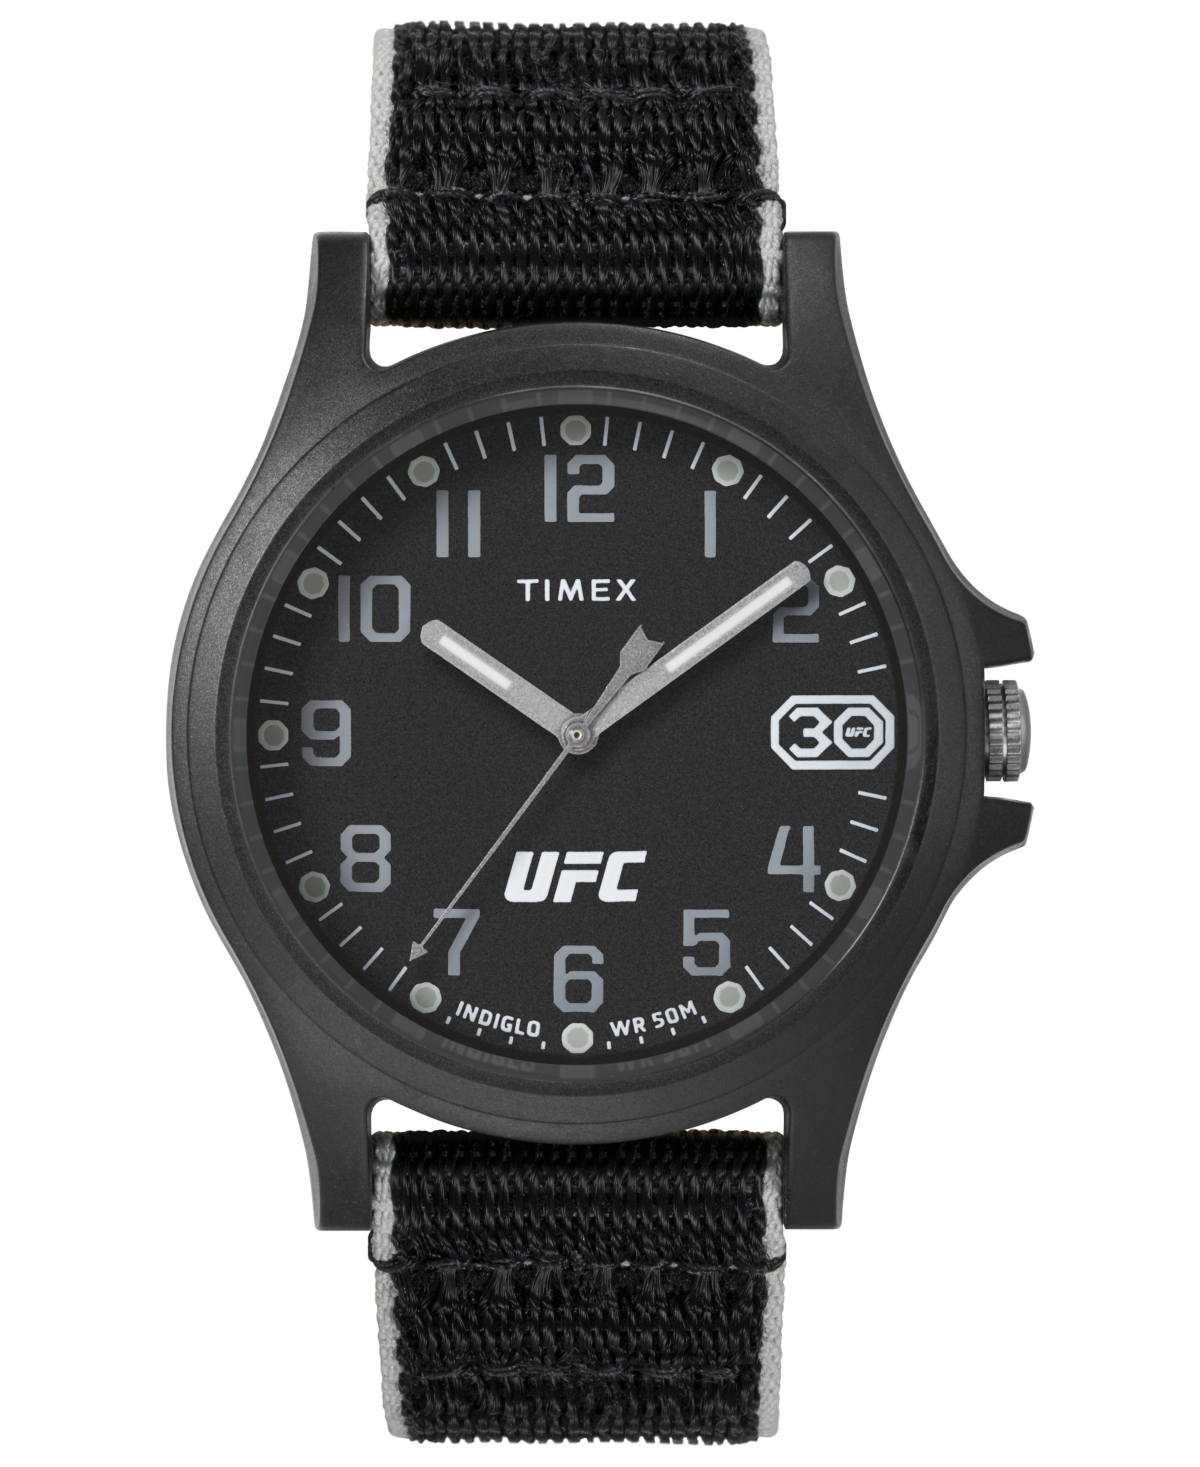 Ufc Men's Apex Analog Black Nylon Watch, 40mm - Black